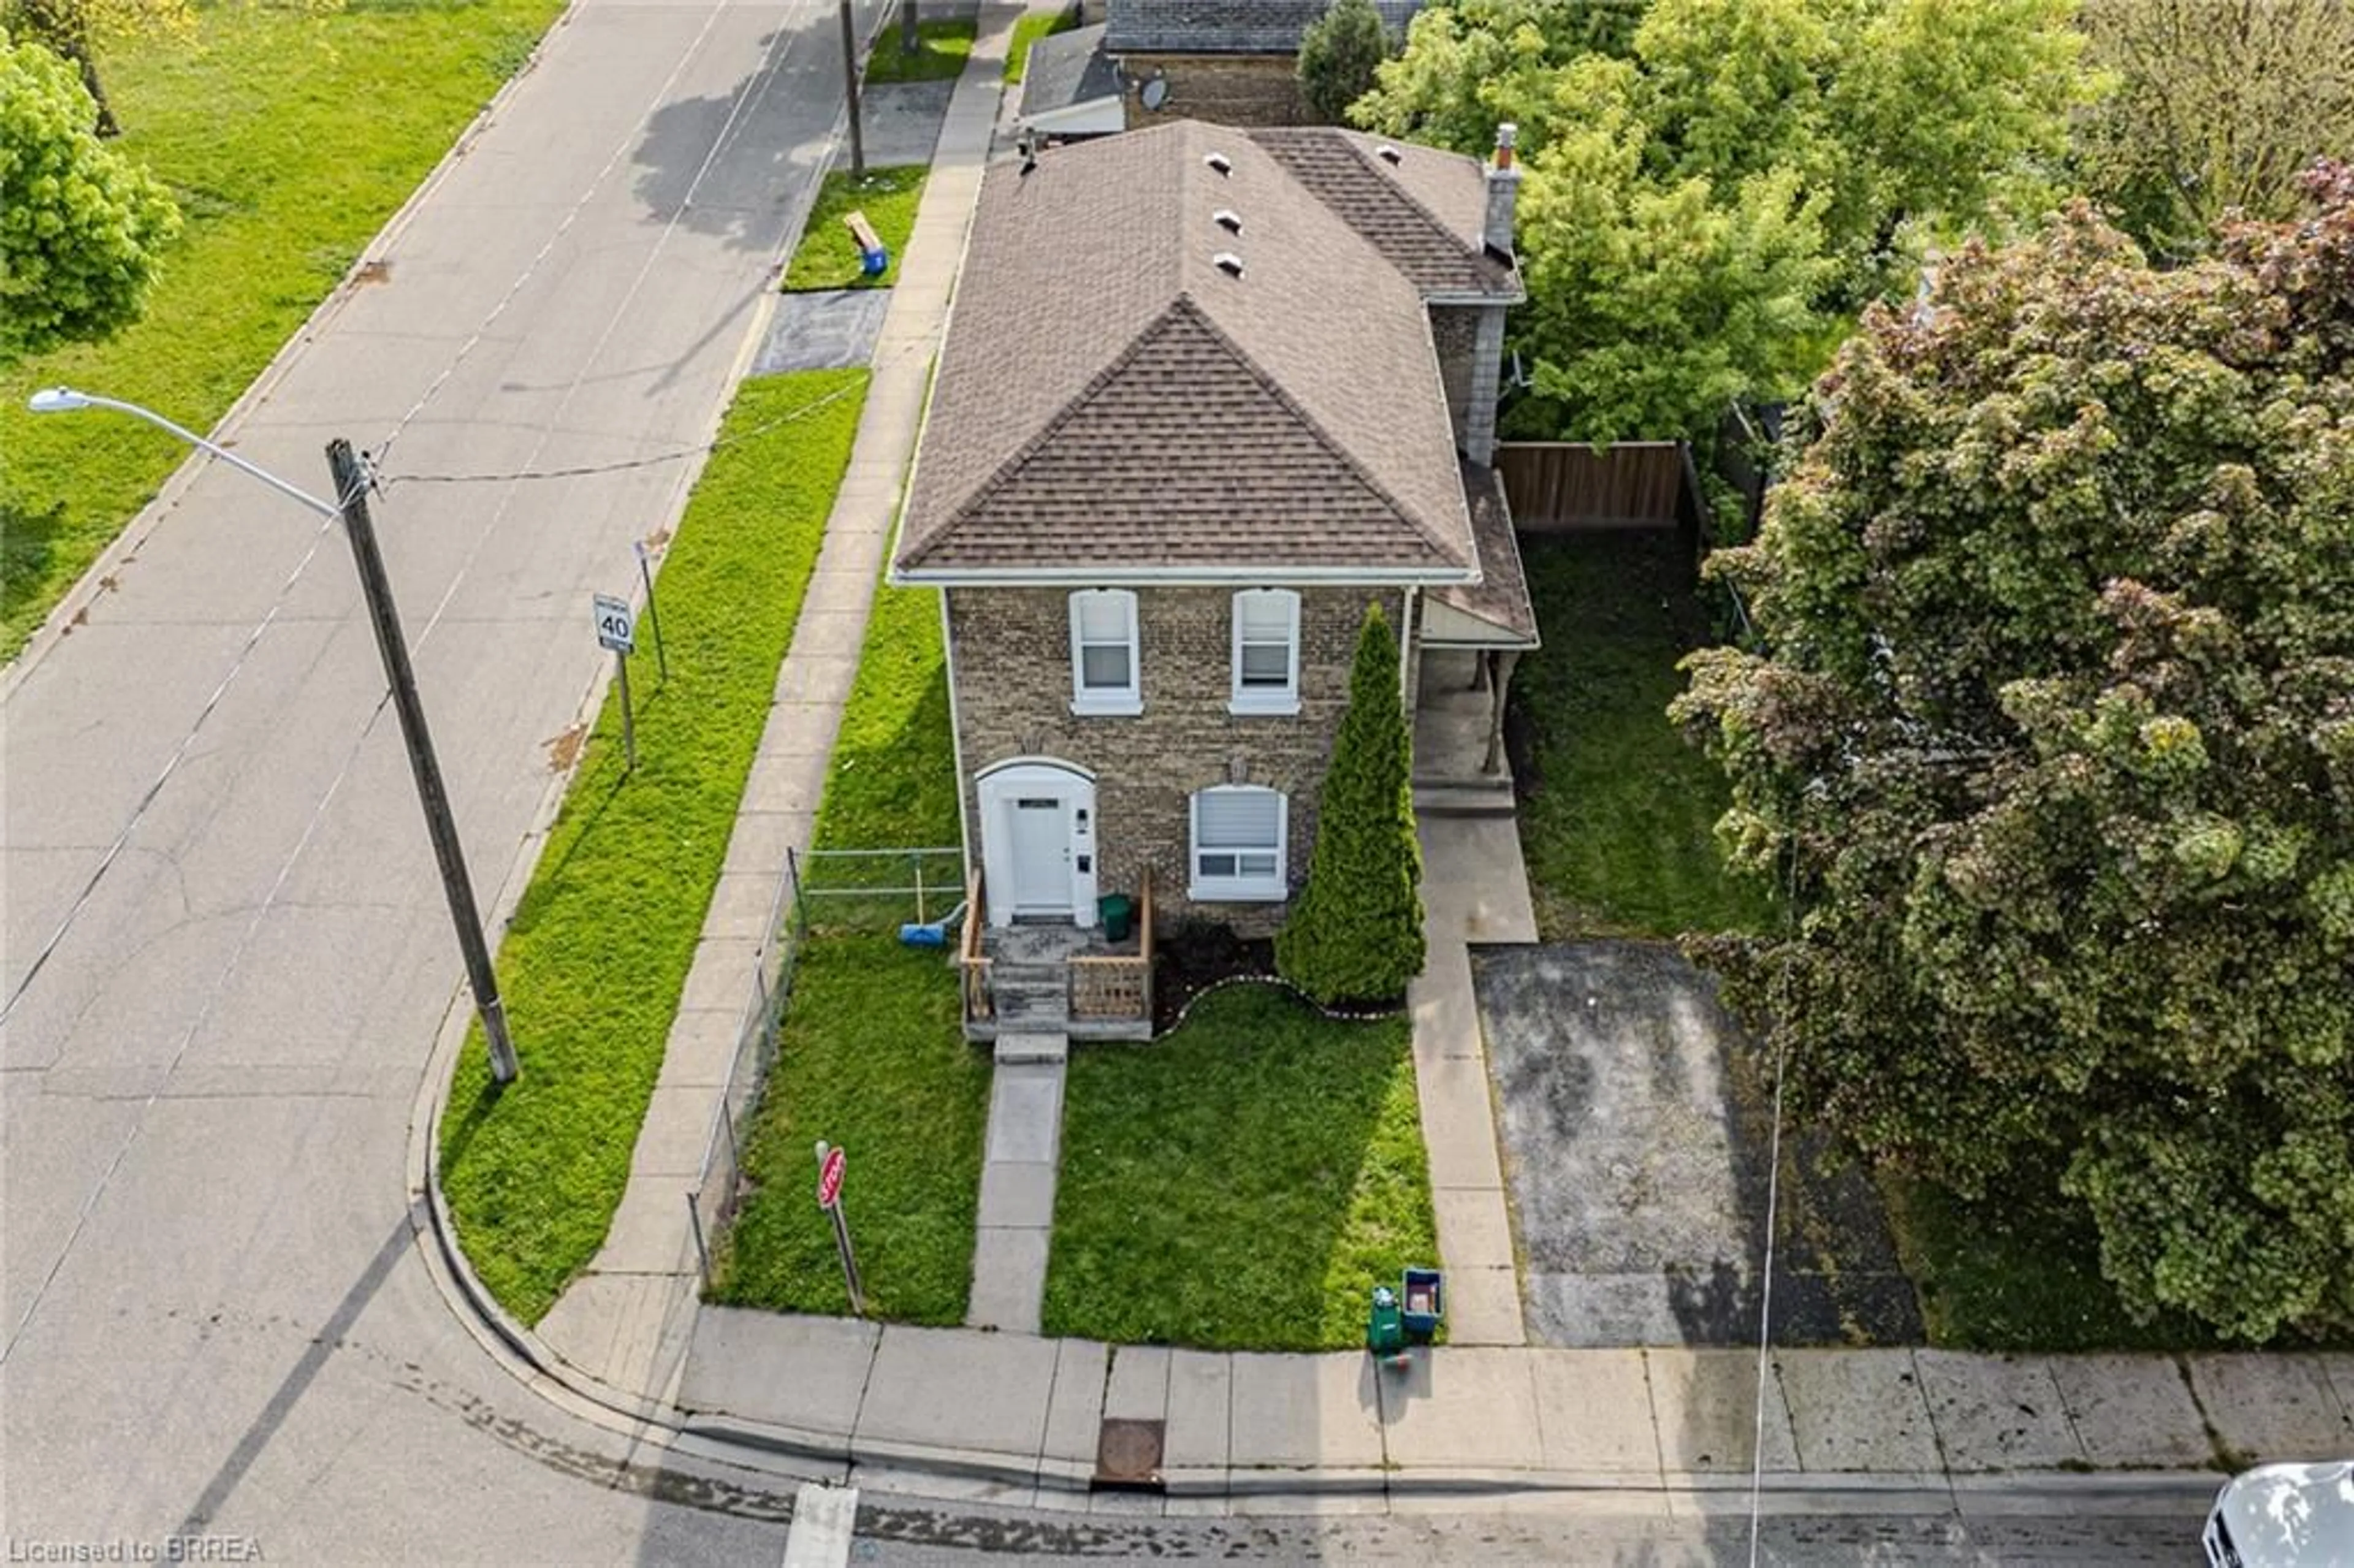 Frontside or backside of a home for 211 Brock St, Brantford Ontario N3S 5W8